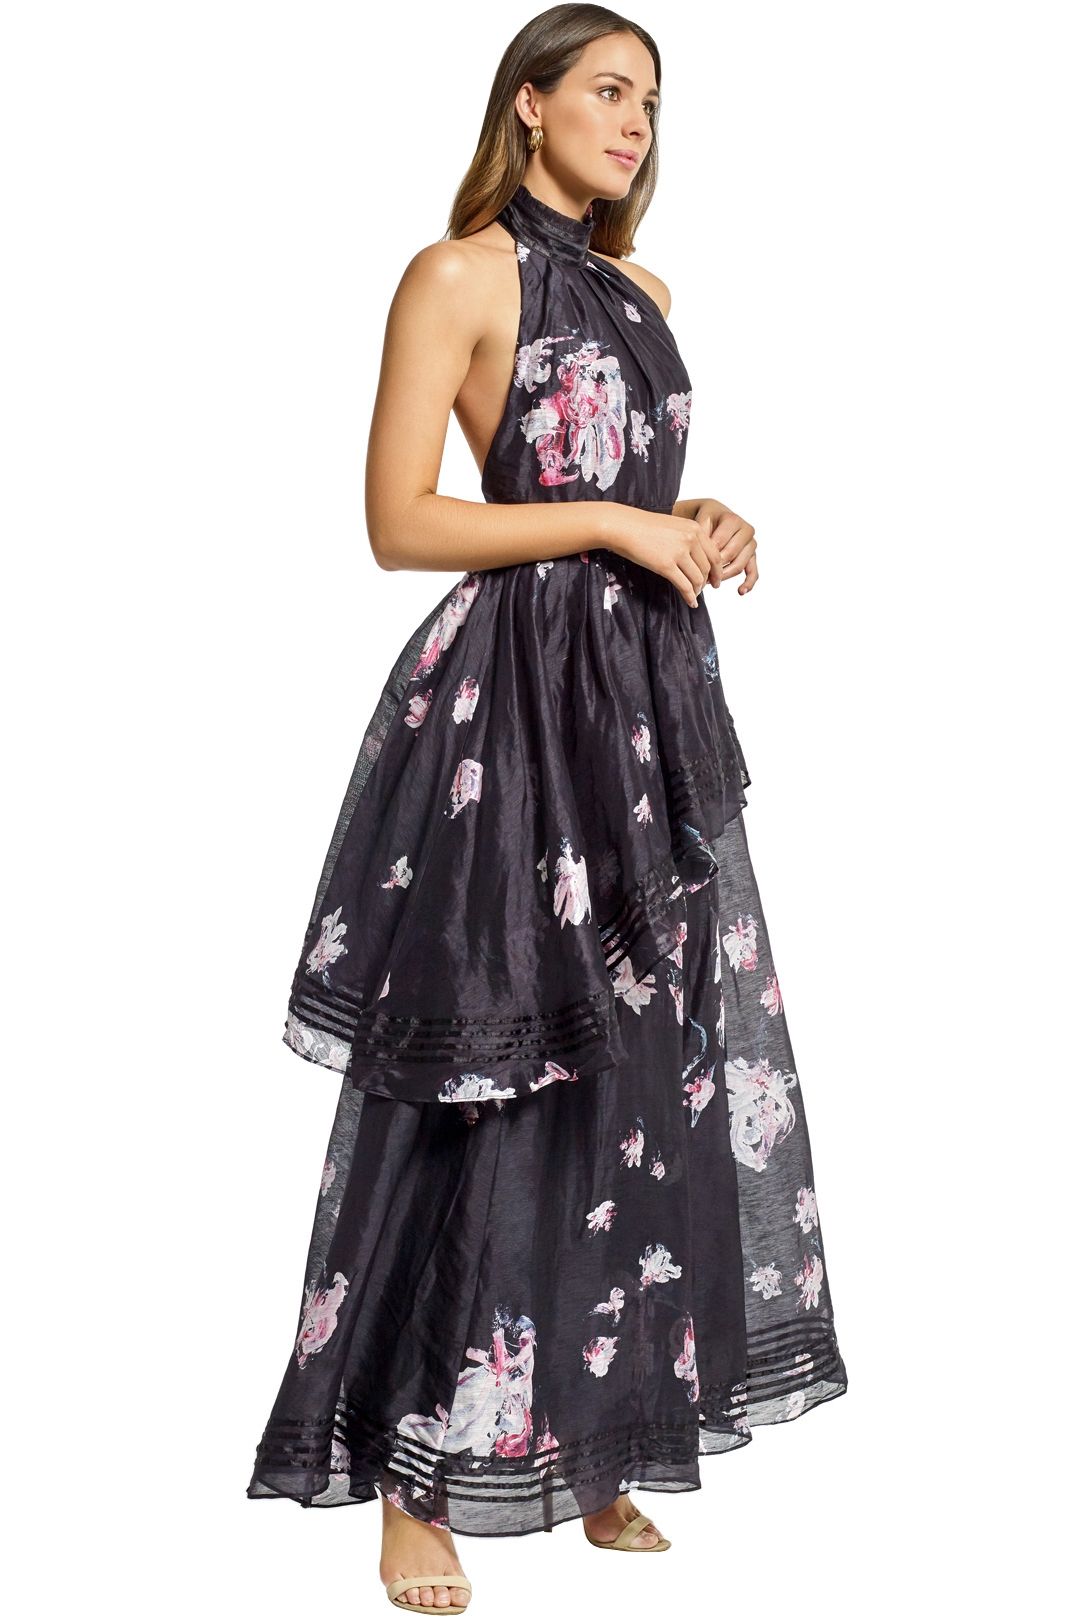 Sienna Dress by Aje for Rent | GlamCorner